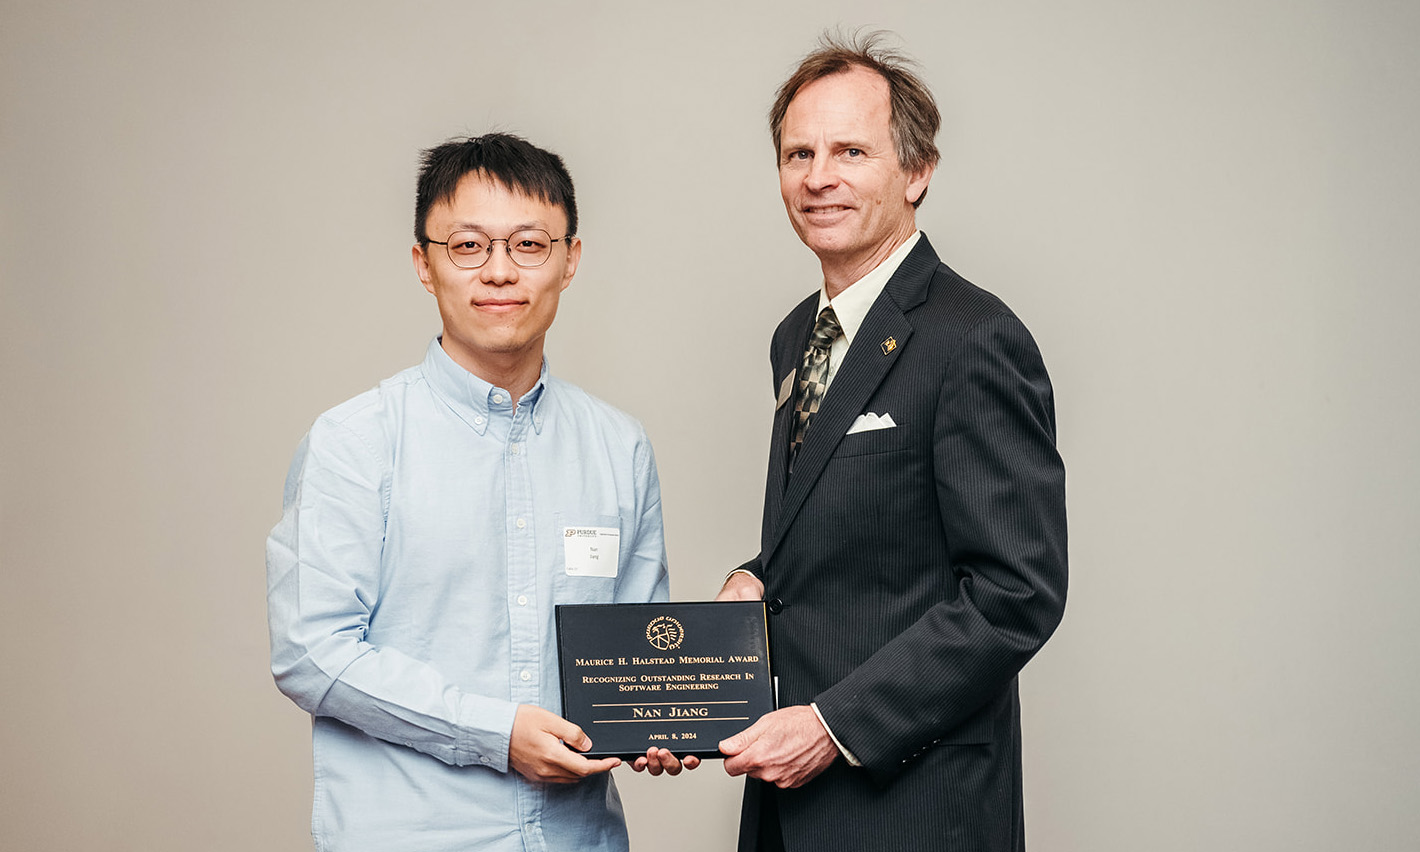 Nan Jiang is the recipient of the Professor Maurice H. Halstead Award